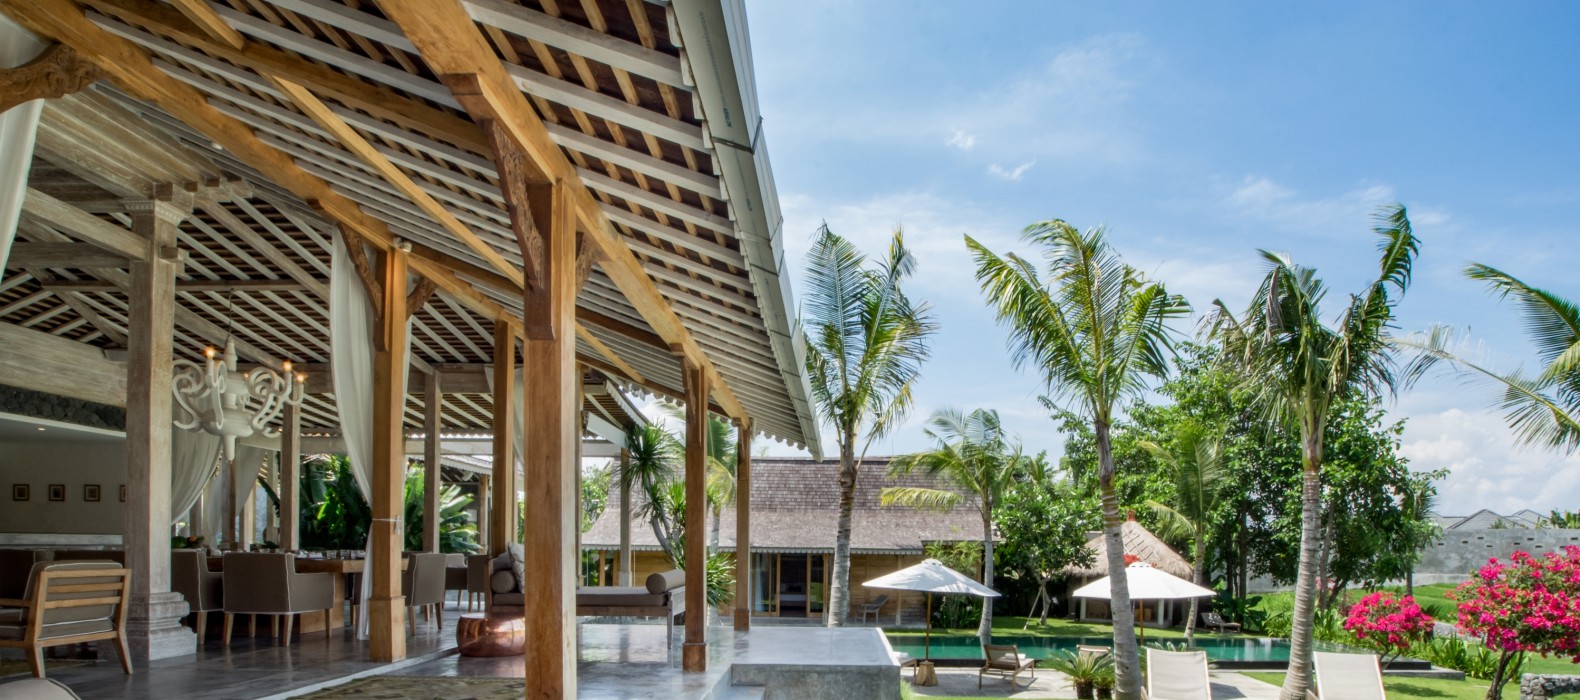 Exterior area of Villa Manoa Estate in Bali